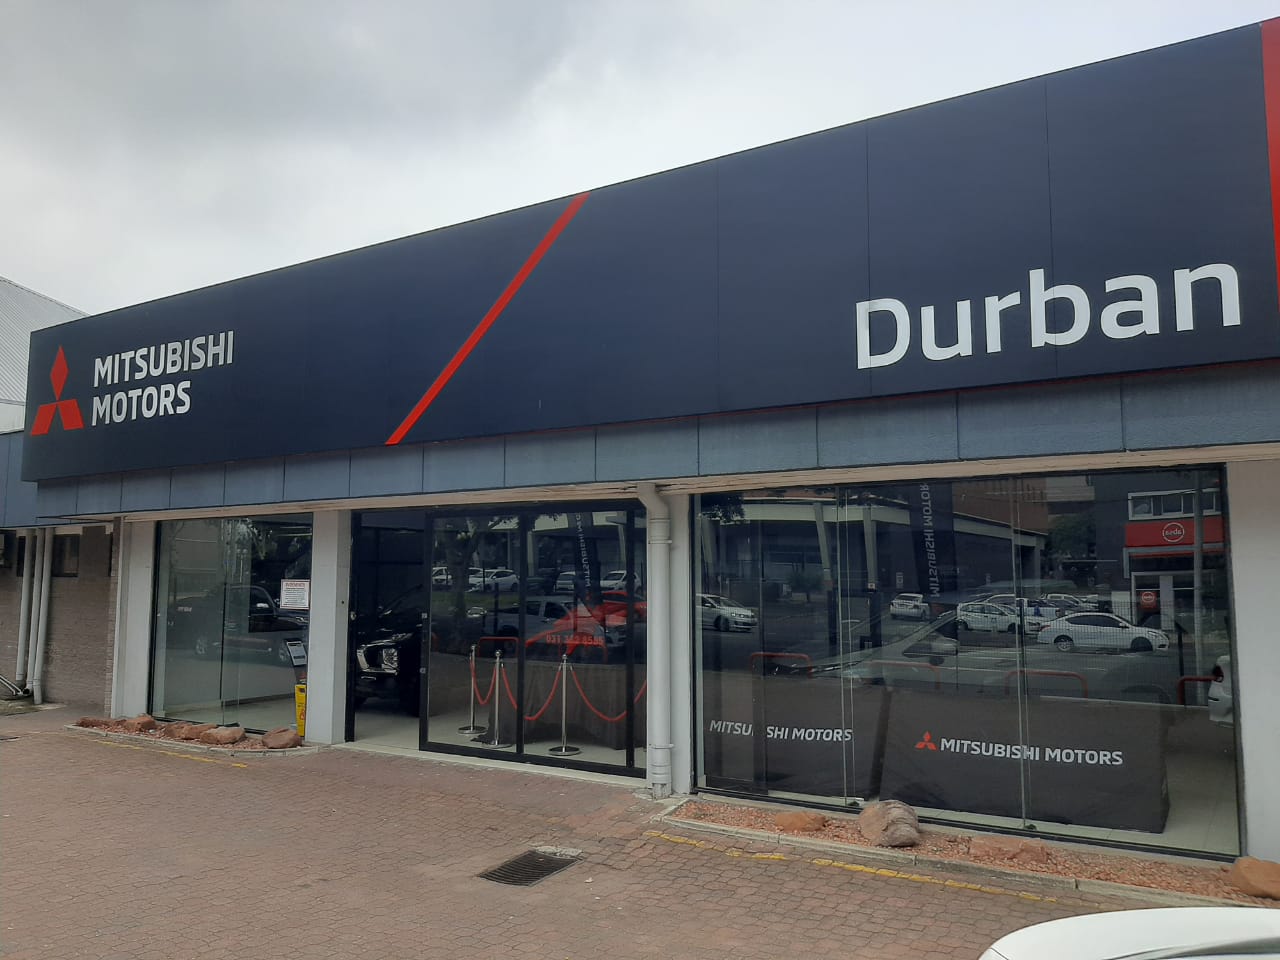 Mitsubishi Motors Durban dealer image0